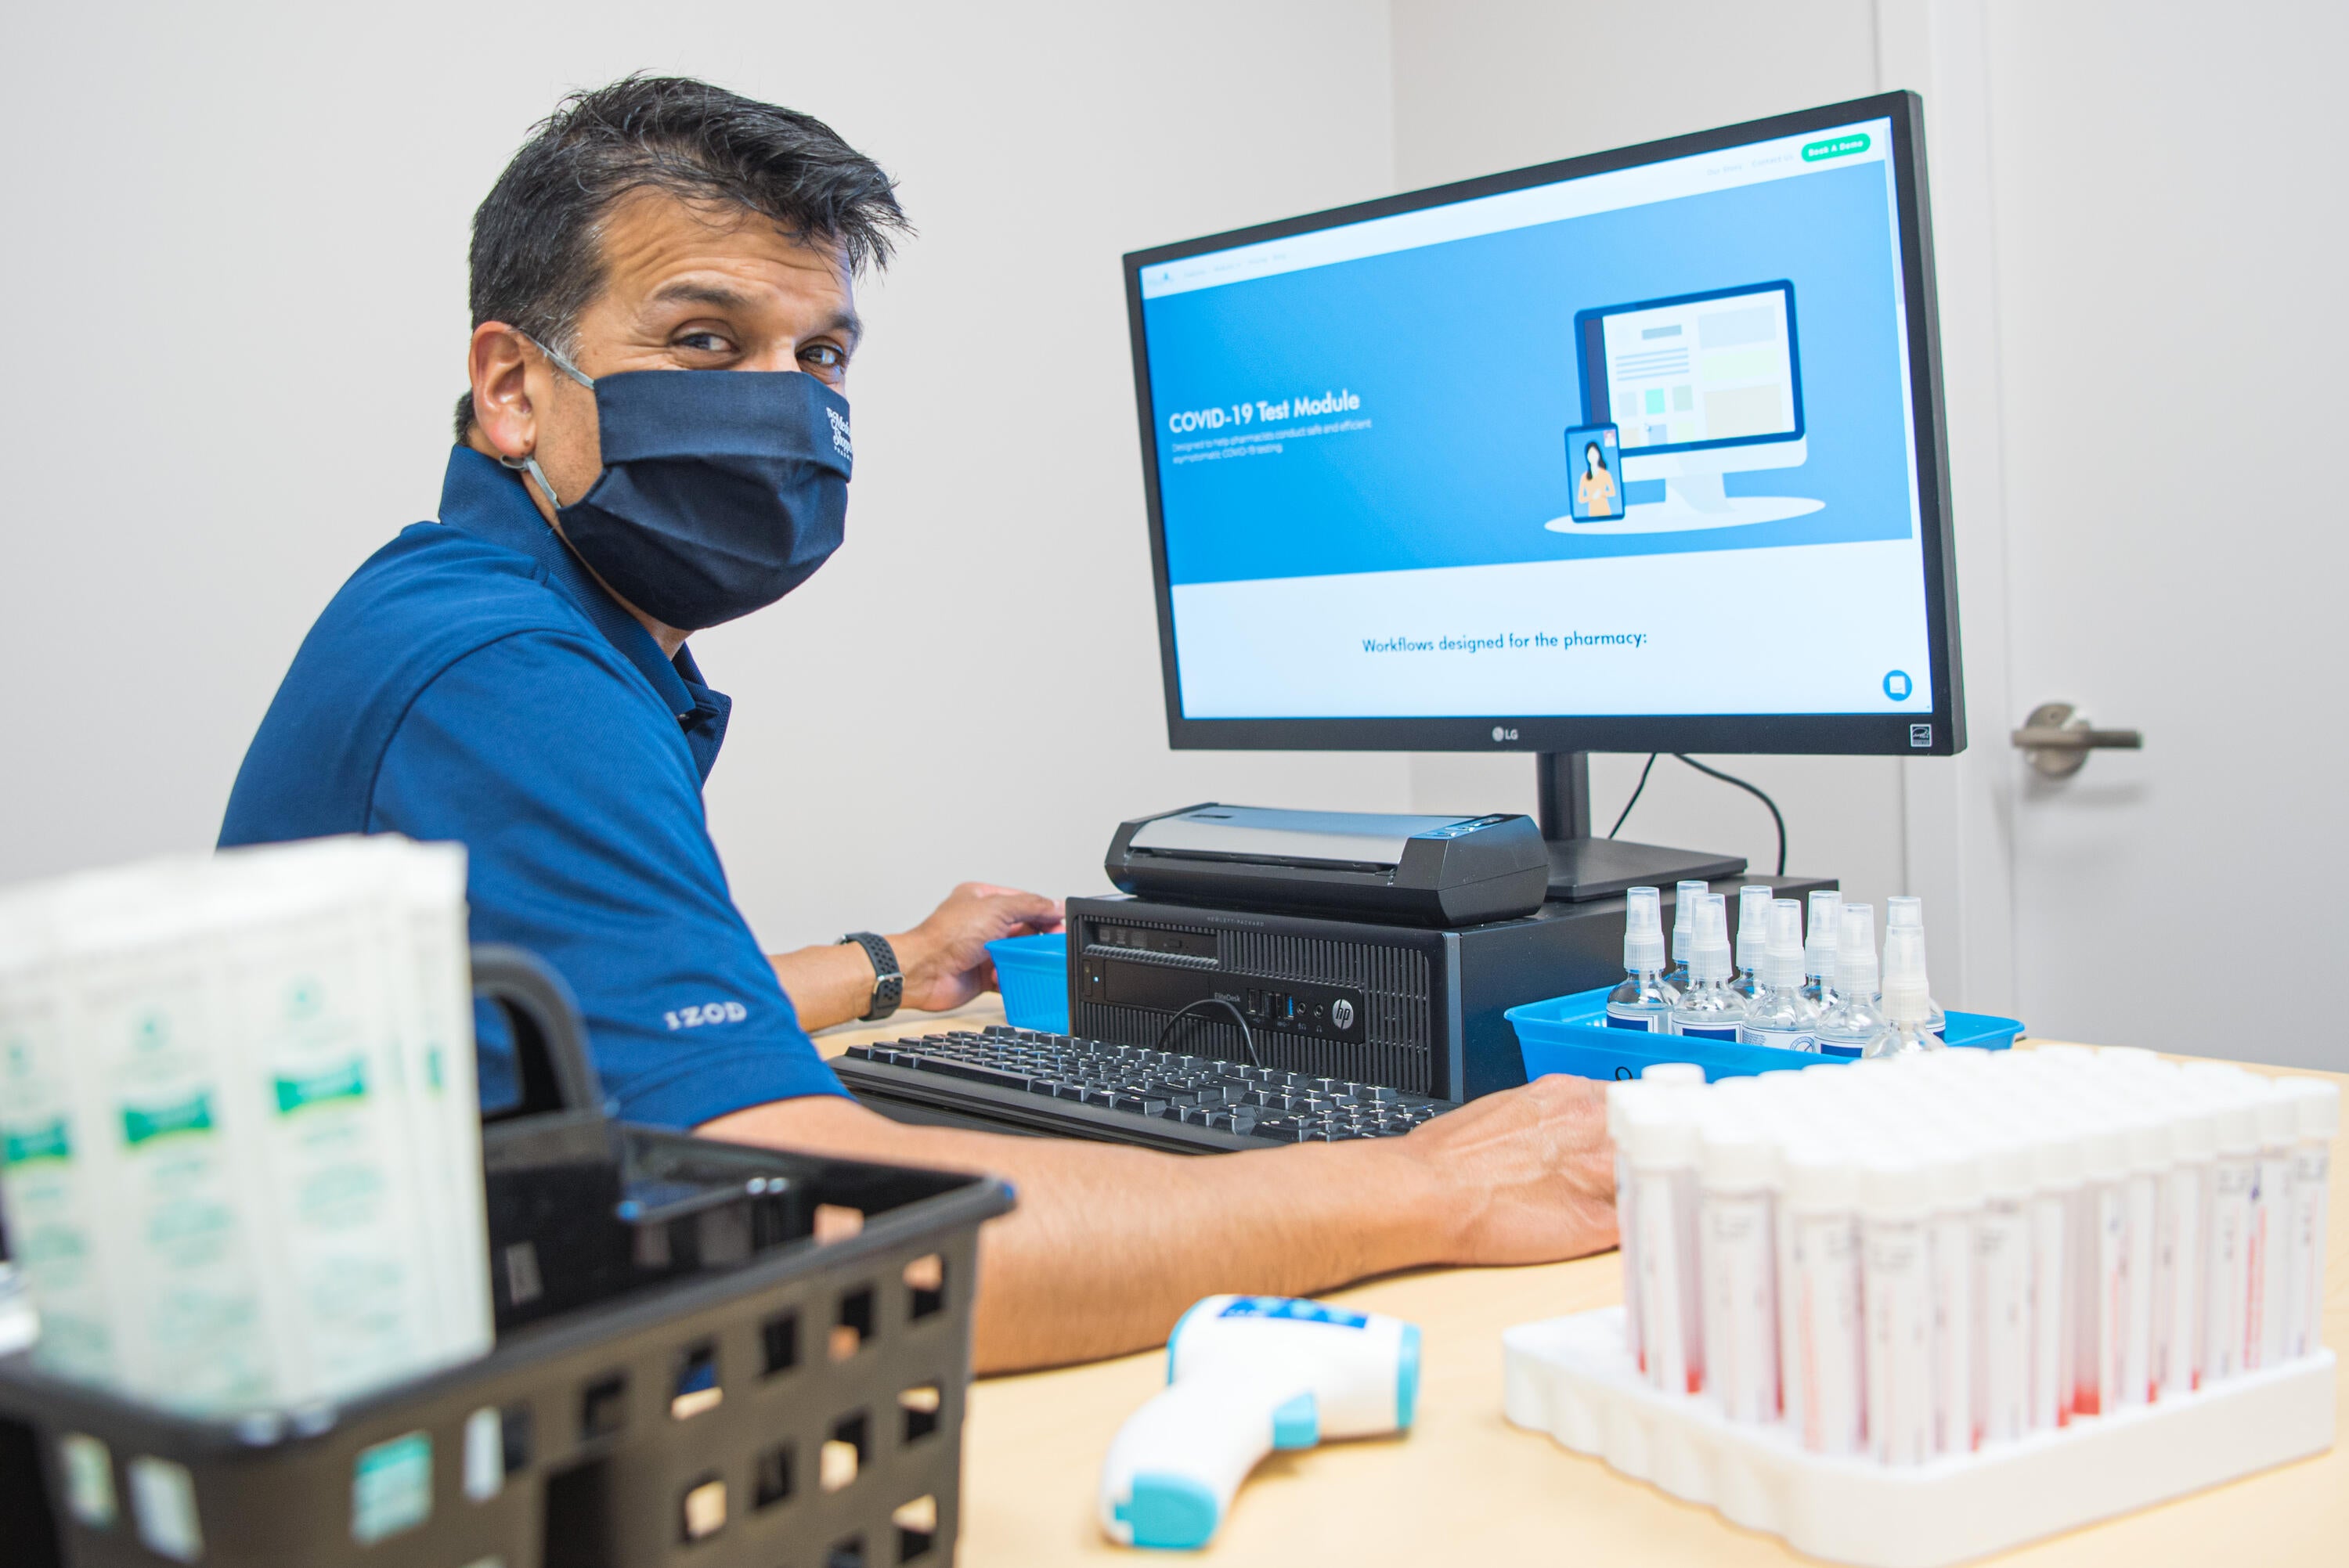 Suhas Thaleshvar, pharmacist and MedMe Health, at work using the MedMe system.